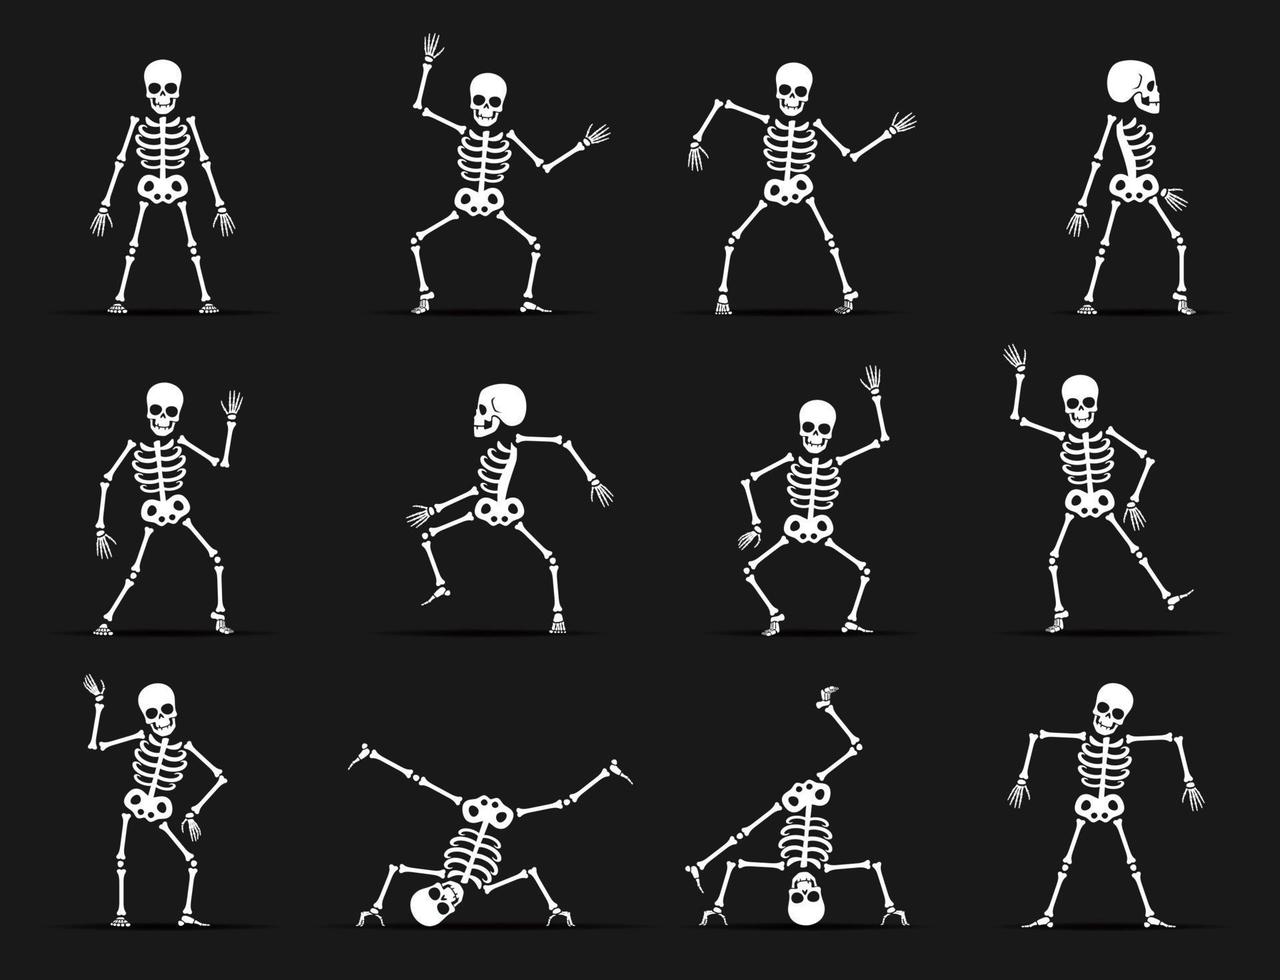 Skeleton dance animated game sprite vector set